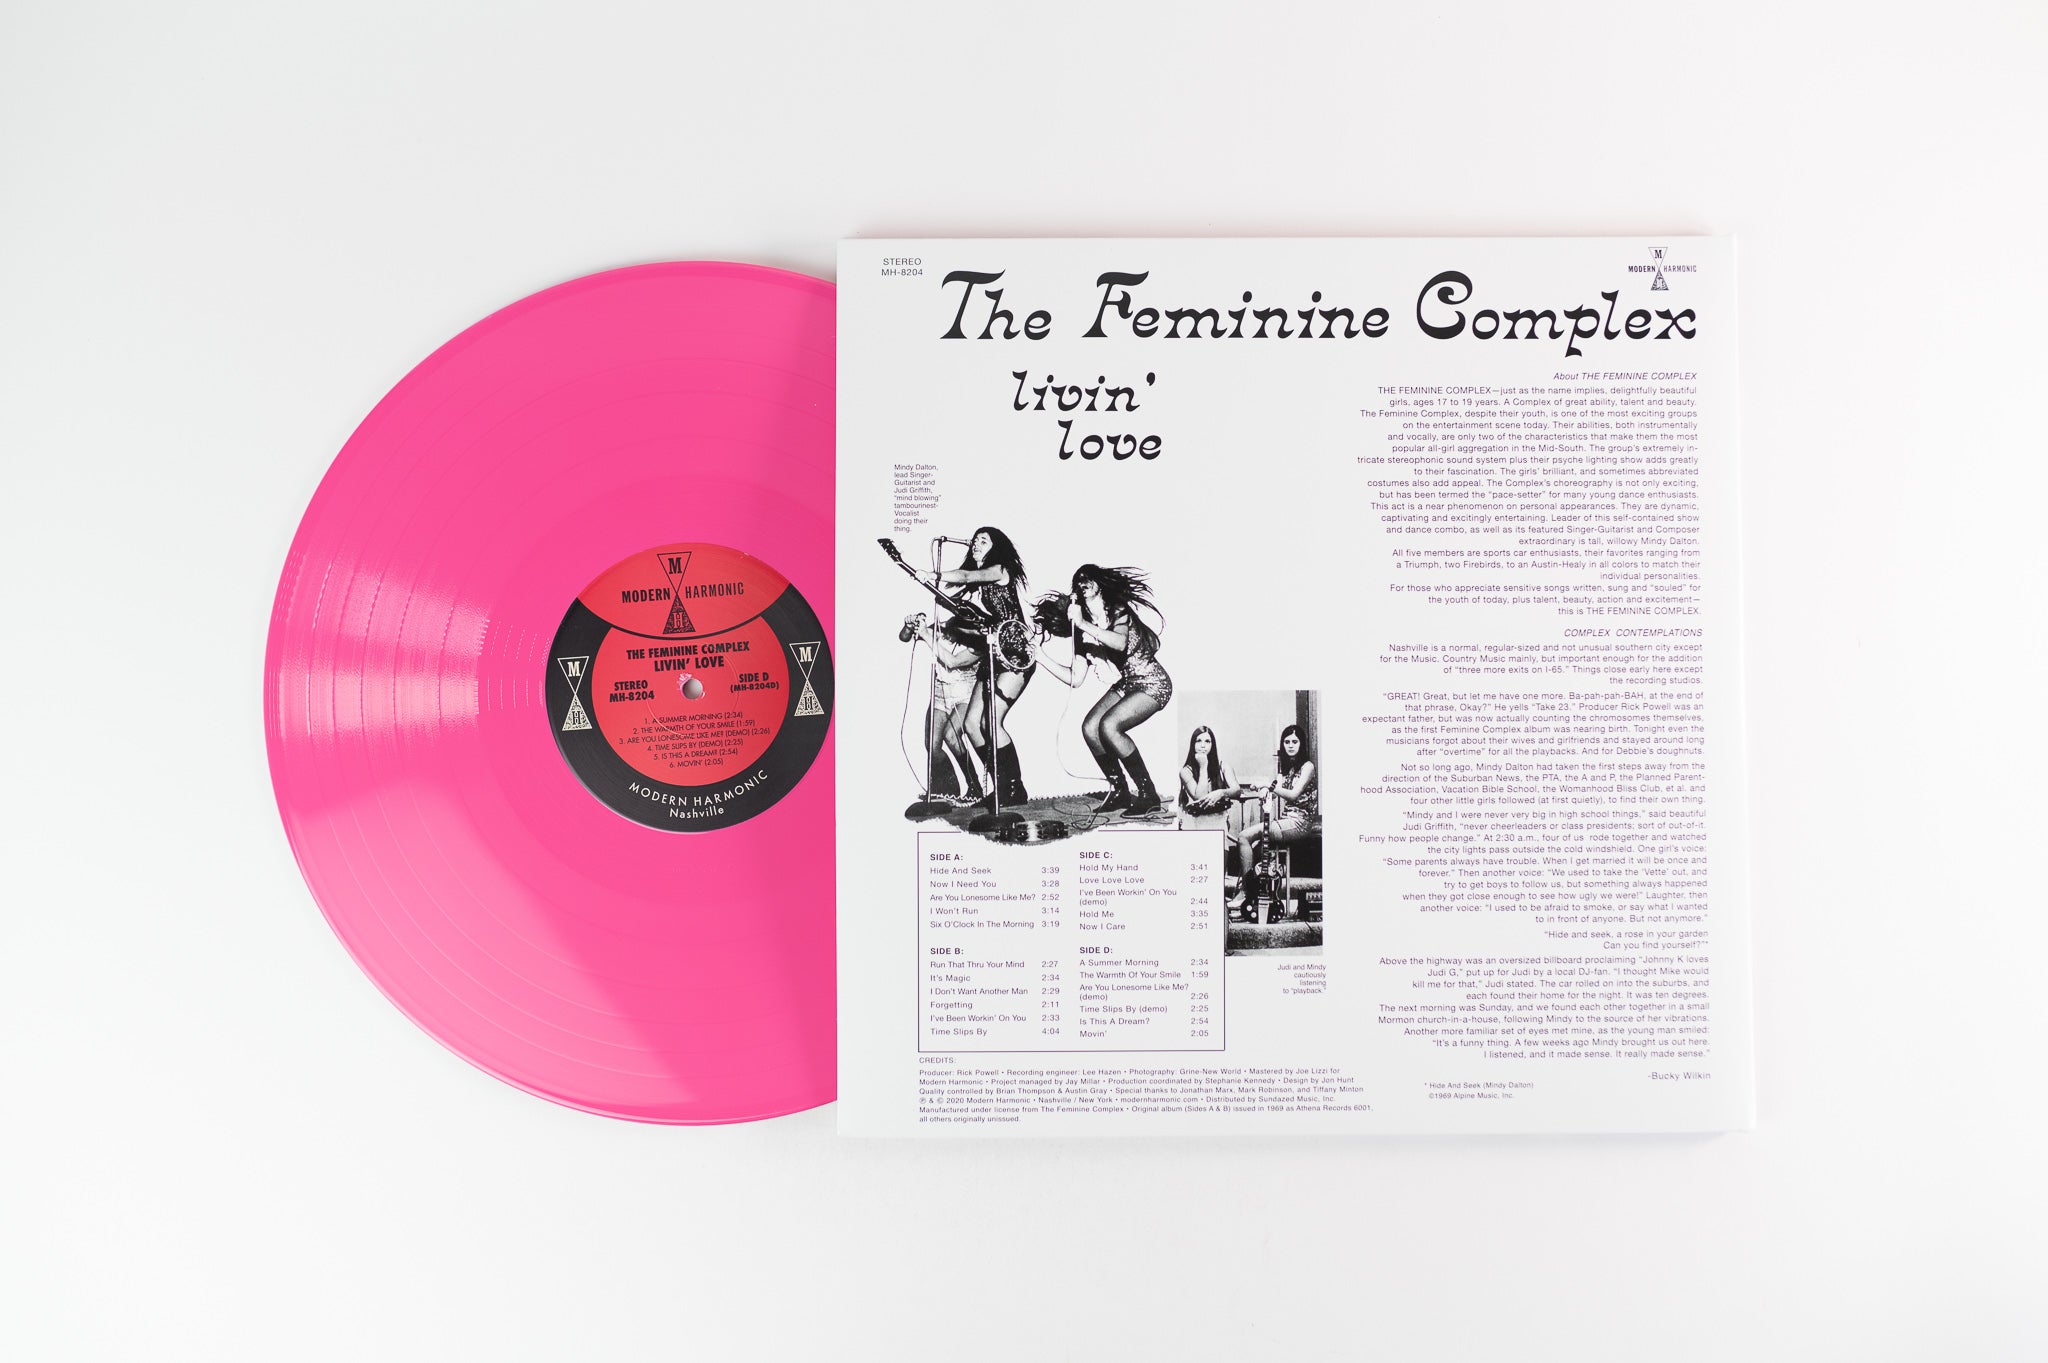 The Feminine Complex - Livin Love on Modern Harmonic - Pink Vinyl